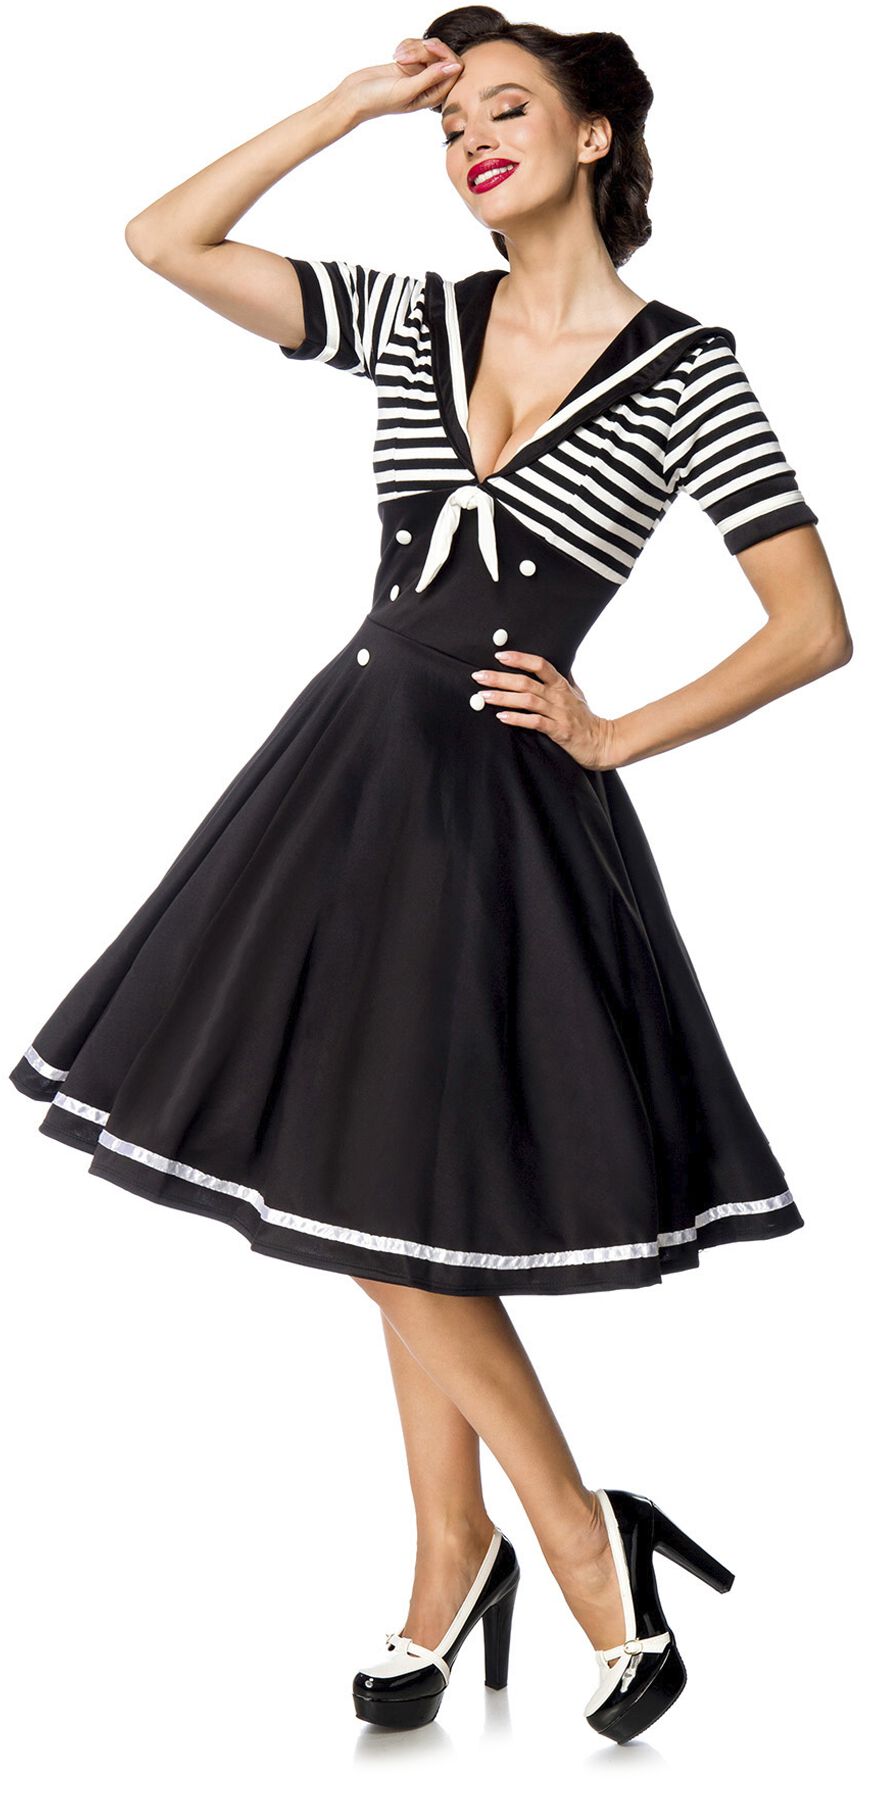 Belsira - Swing-Kleid im Marinelook - Kleid knielang - schwarz|weiß